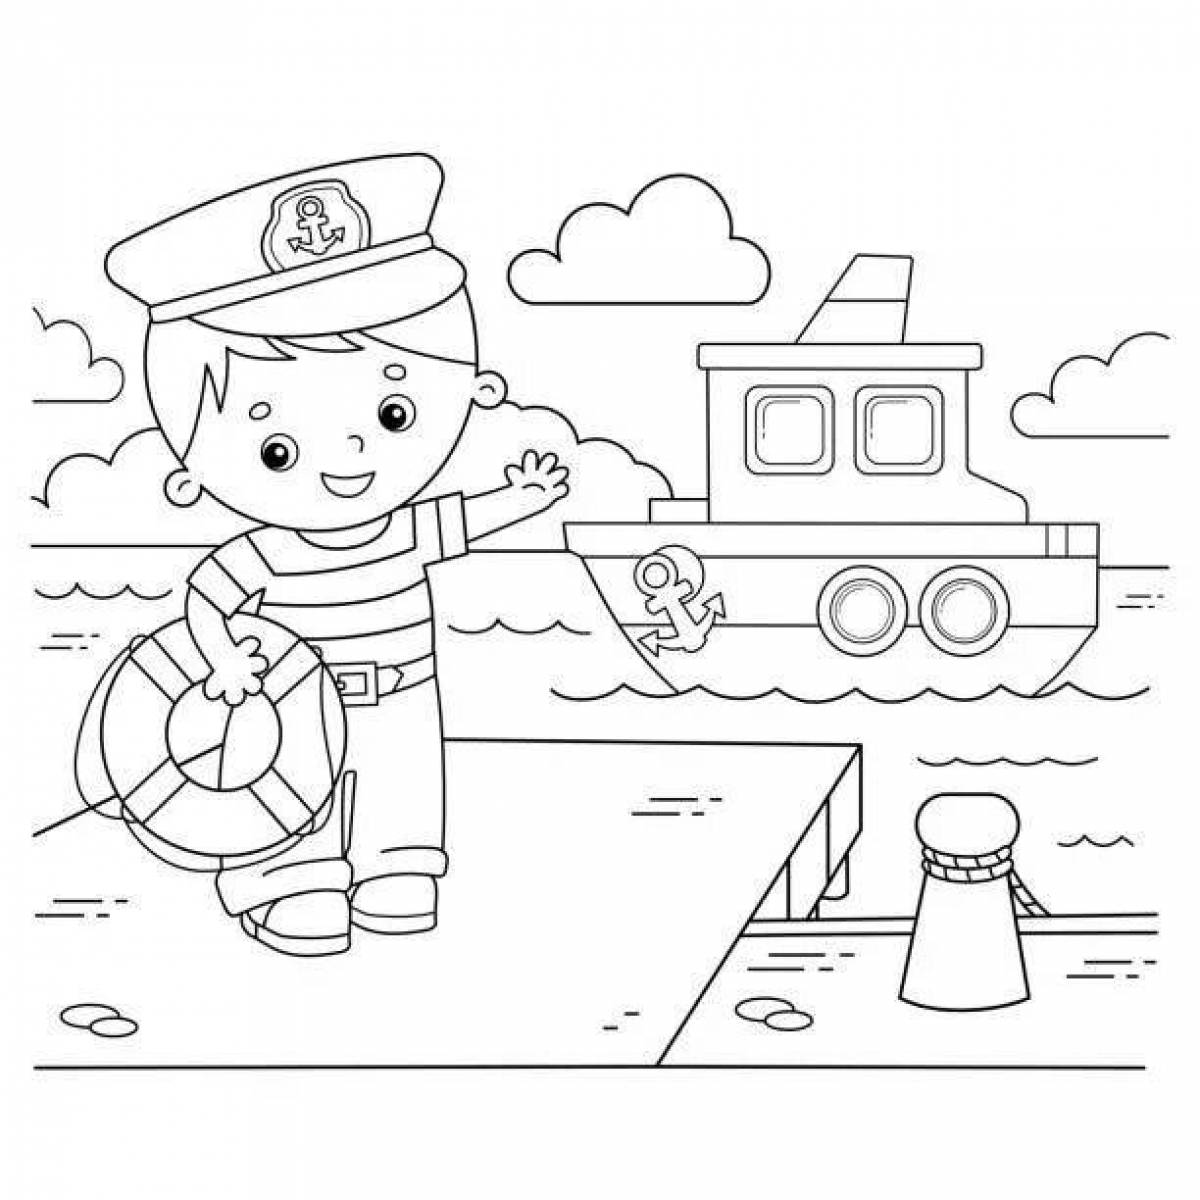 Colorful-sailor-voyage sailor раскраска для детей